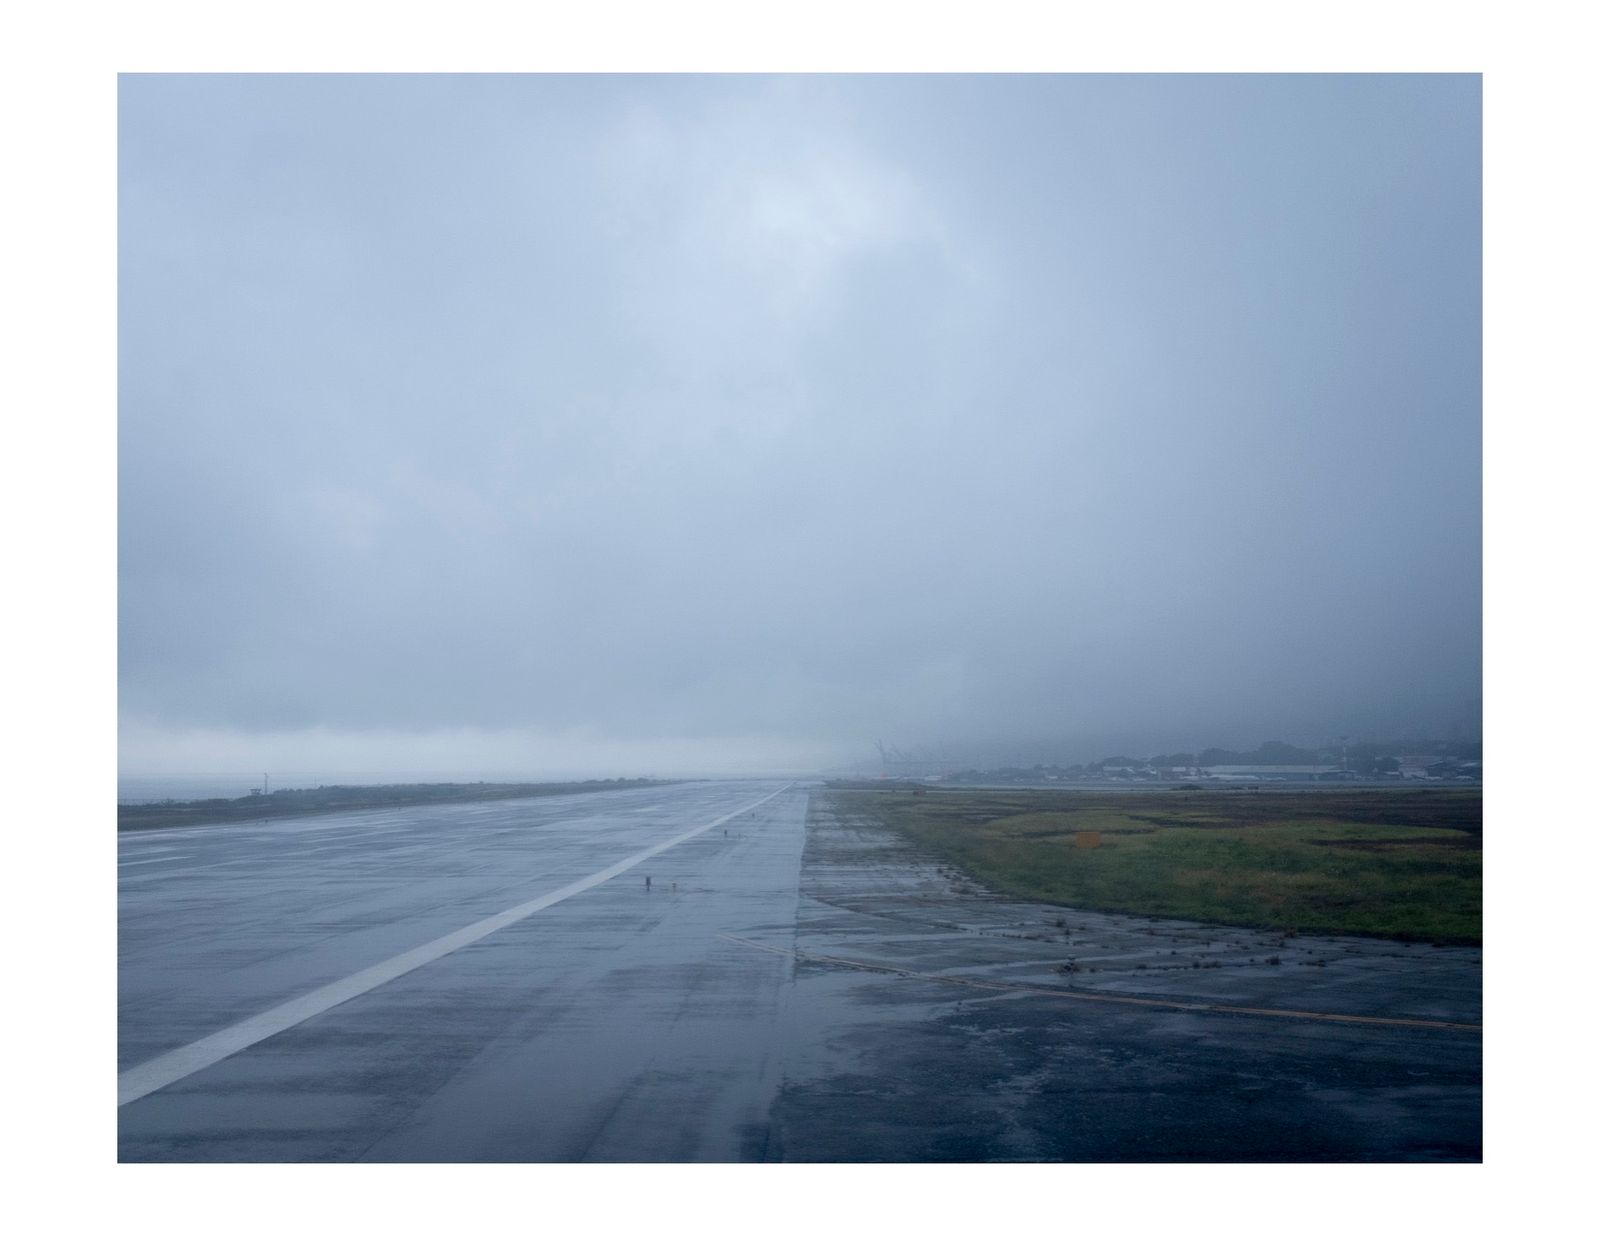 © Andrea Hernández Briceño - The Simon Bolivar International Airport landing track in the rain in Maiquetia, Venezuela, on July 30, 2018